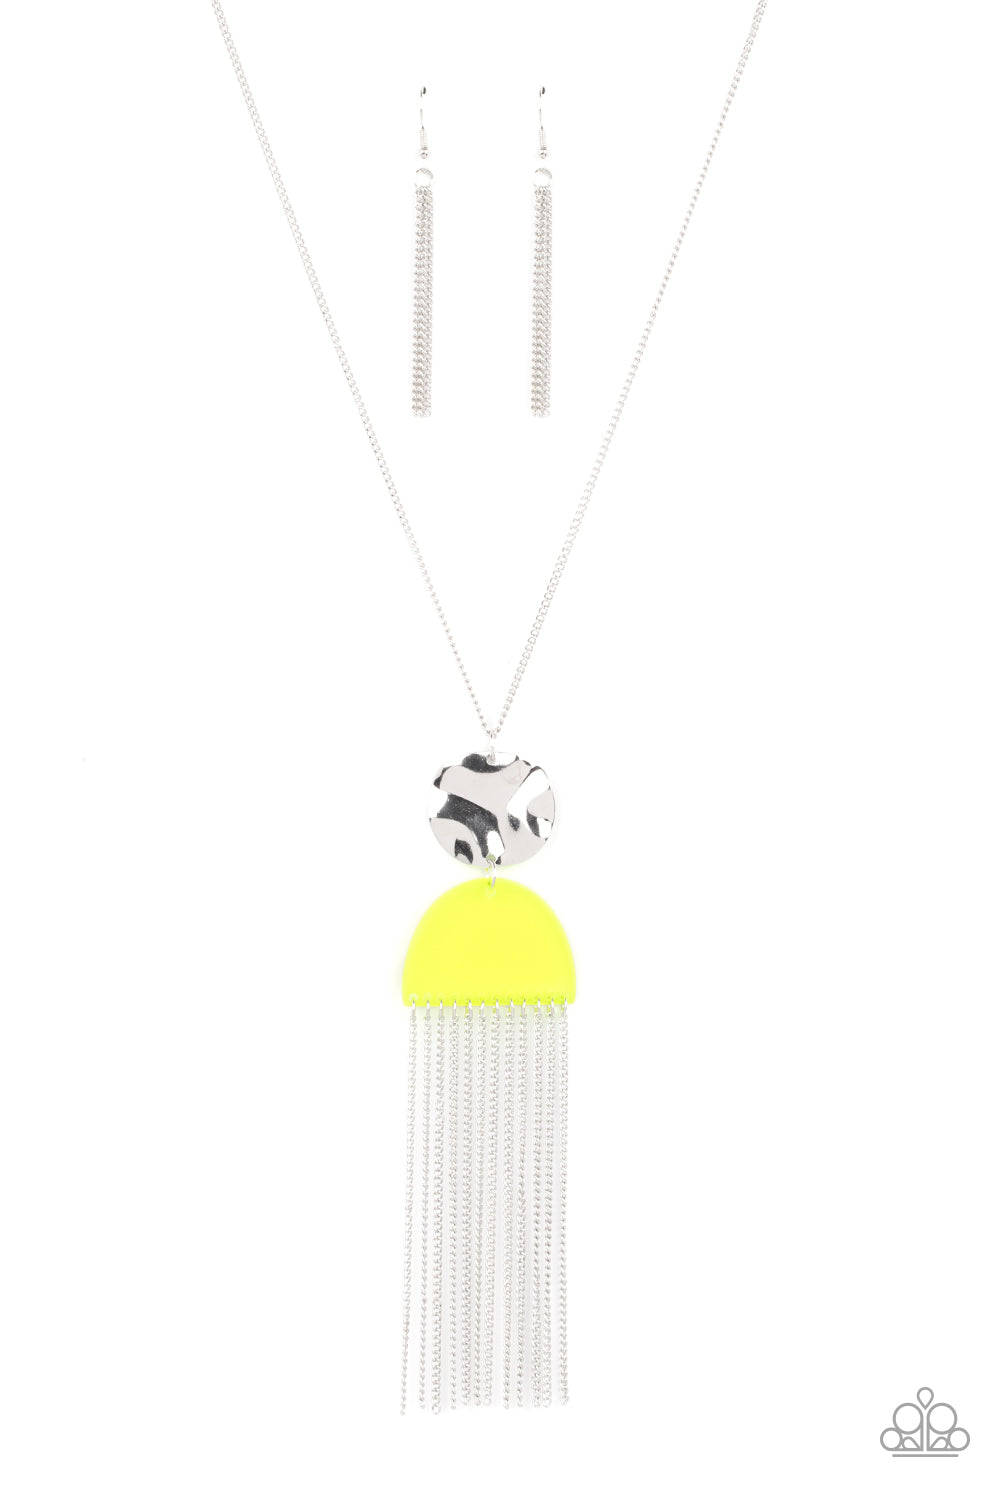 Color Me Neon - Yellow Necklace freeshipping - JewLz4u Gemstone Gallery